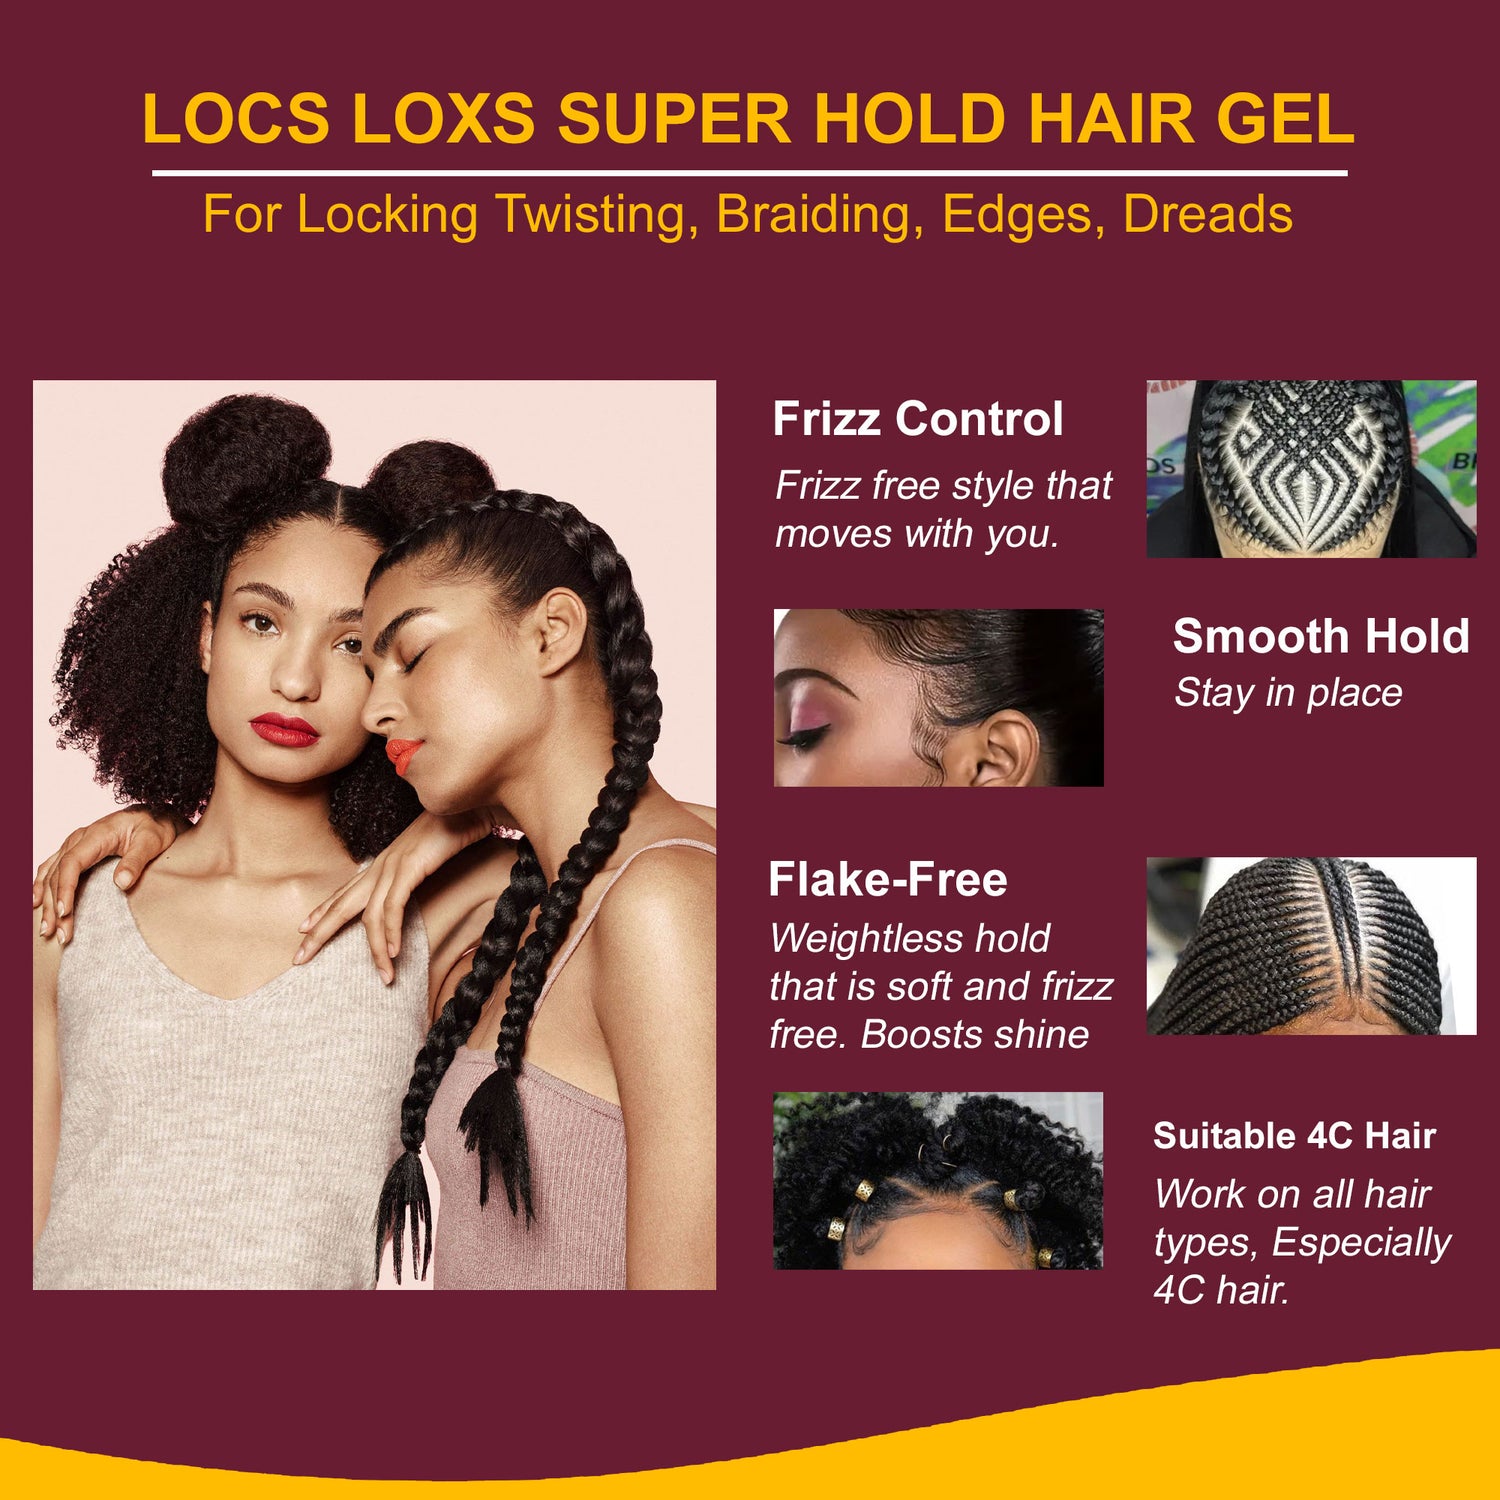 STYLO Locs Loxs Super Hold Hair Gel (16 Fl Oz)